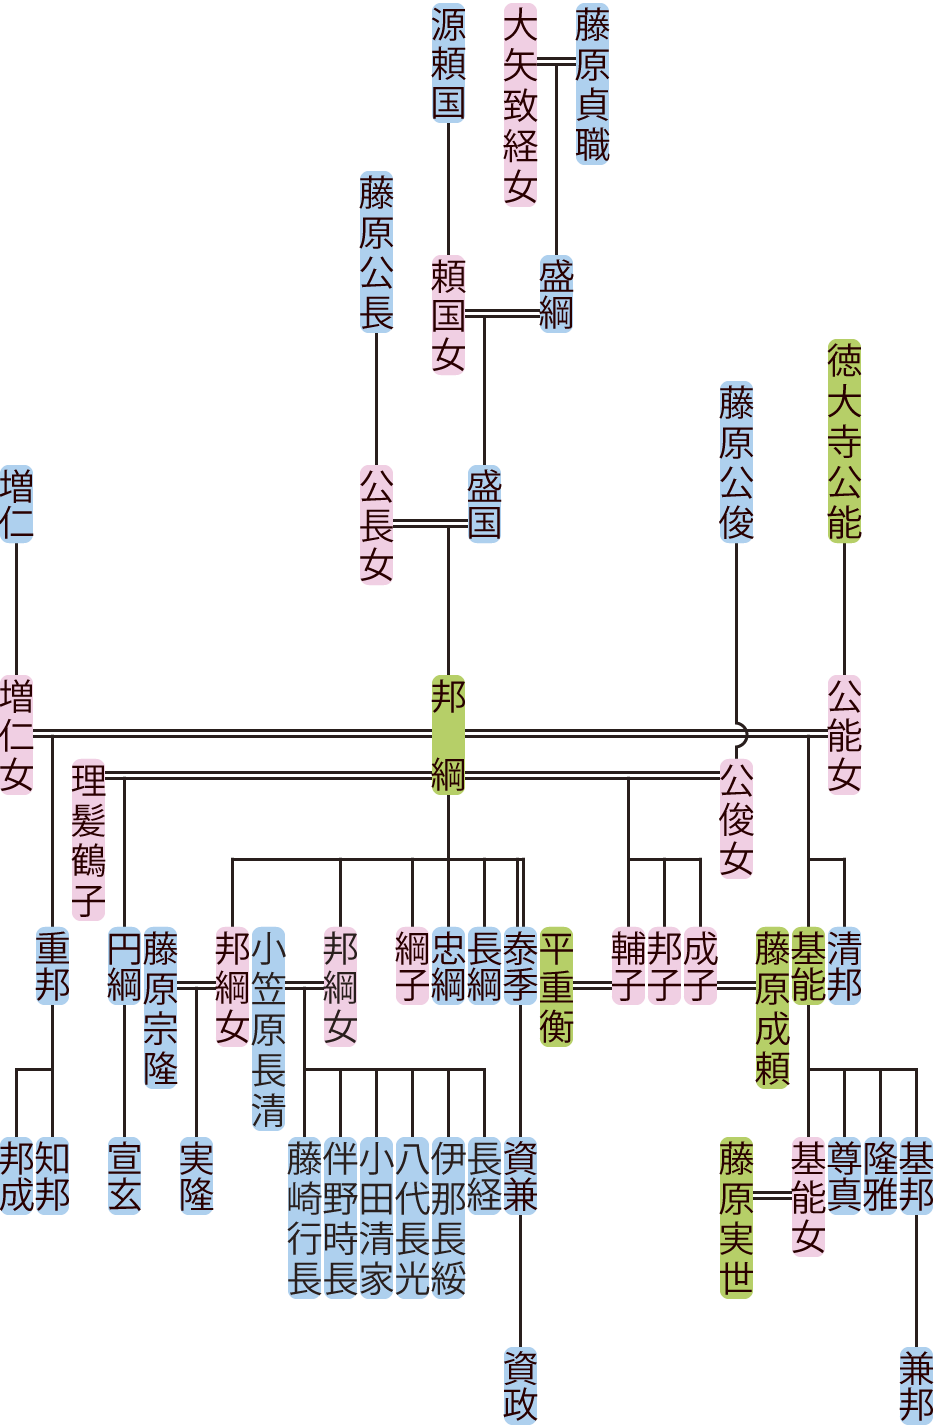 藤原盛国の系図